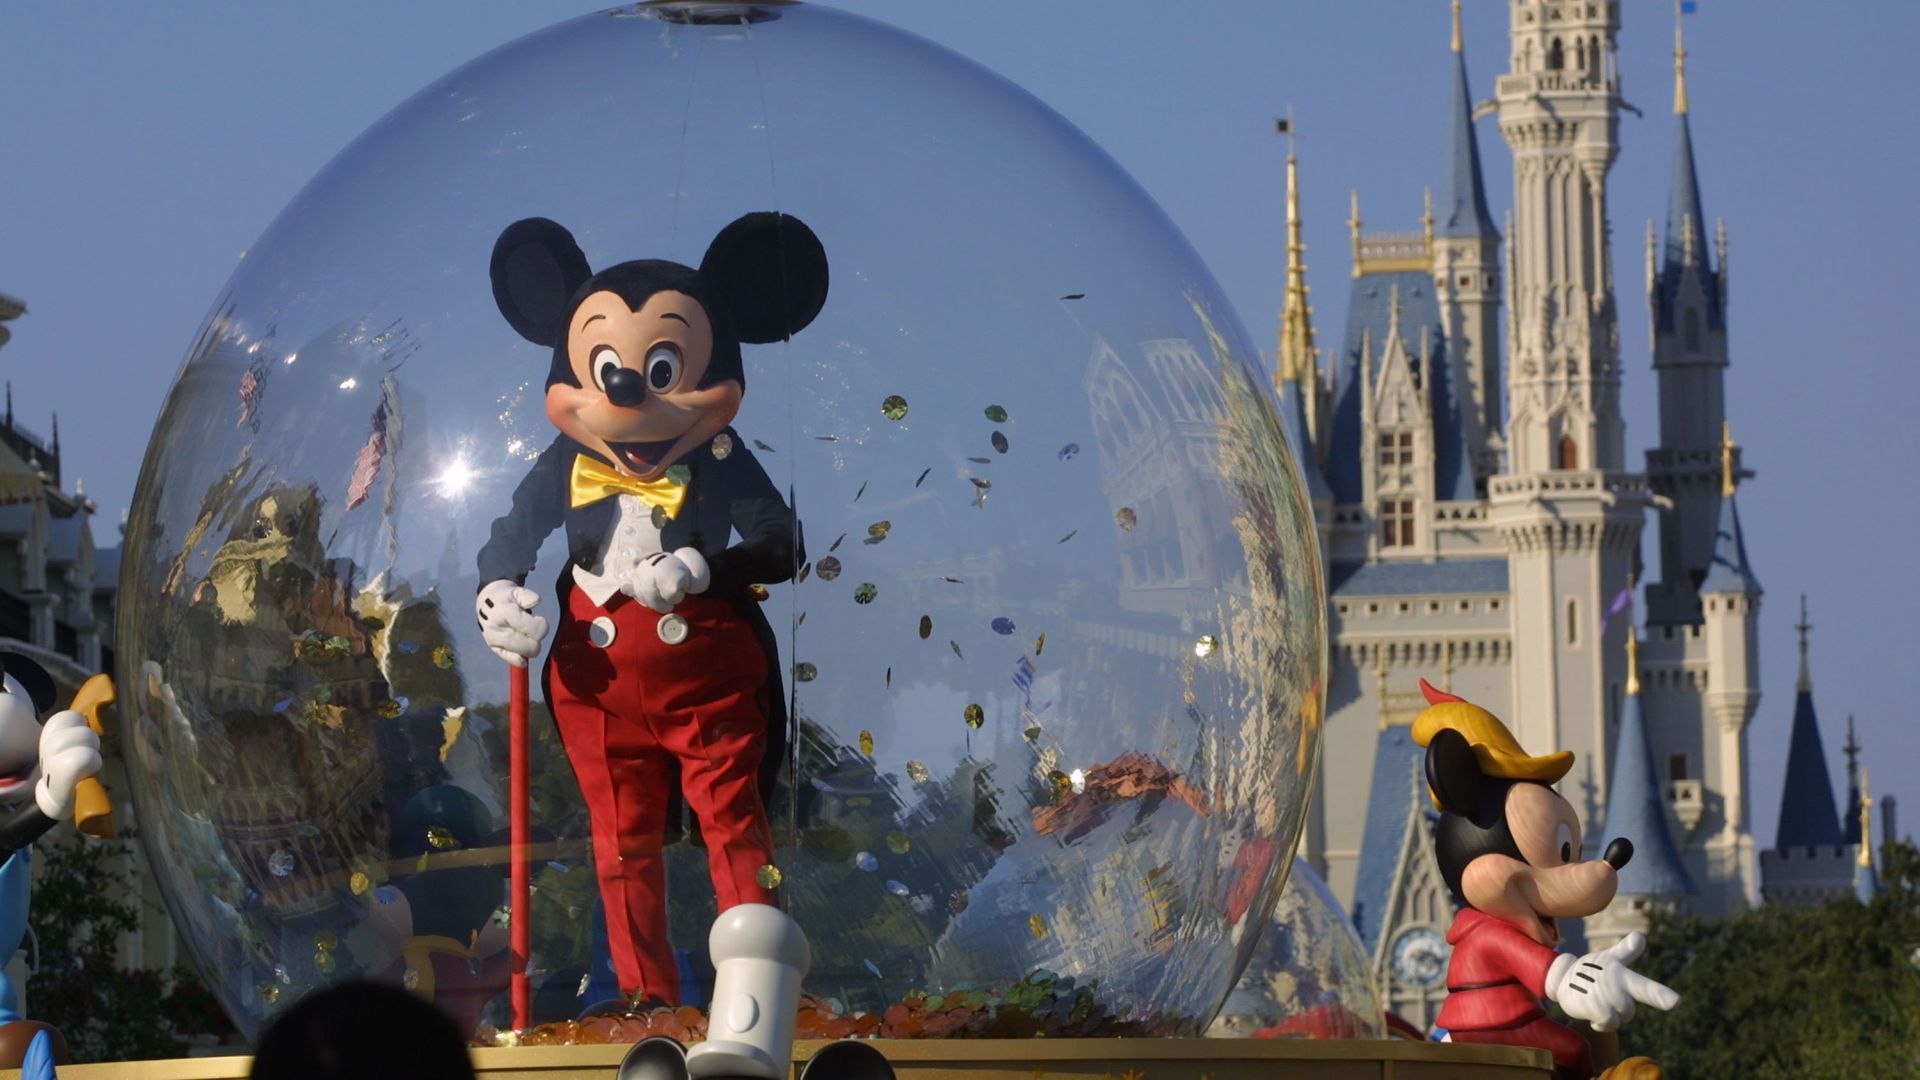 Mickey Mouse rides in a parade at Disney World's Magic Kingdom in Orlando, Florida.